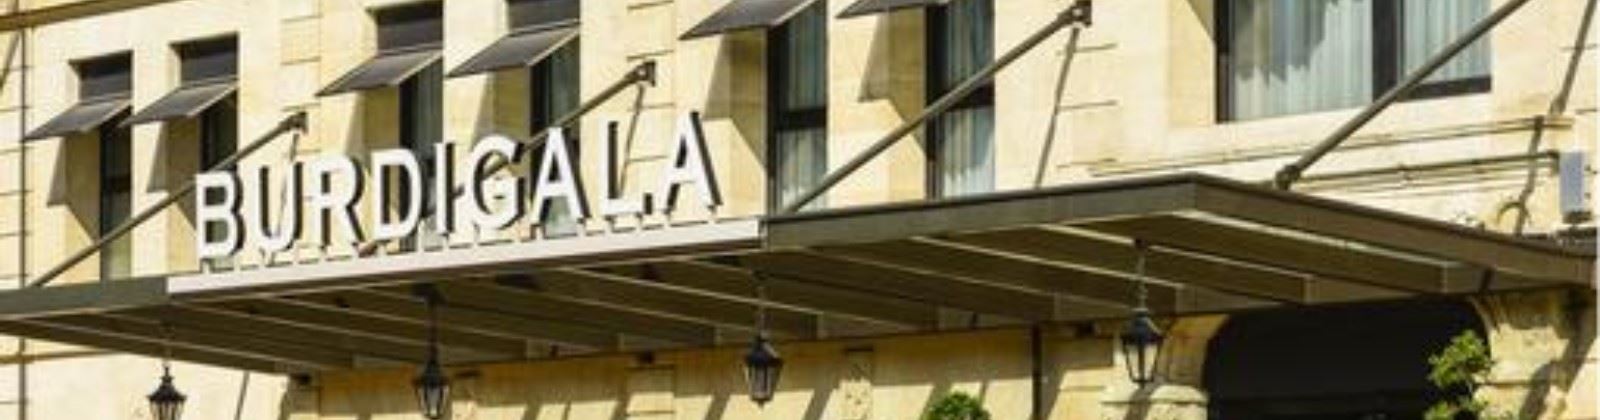 hotel burdigala olevene restaurant seminaires booking 